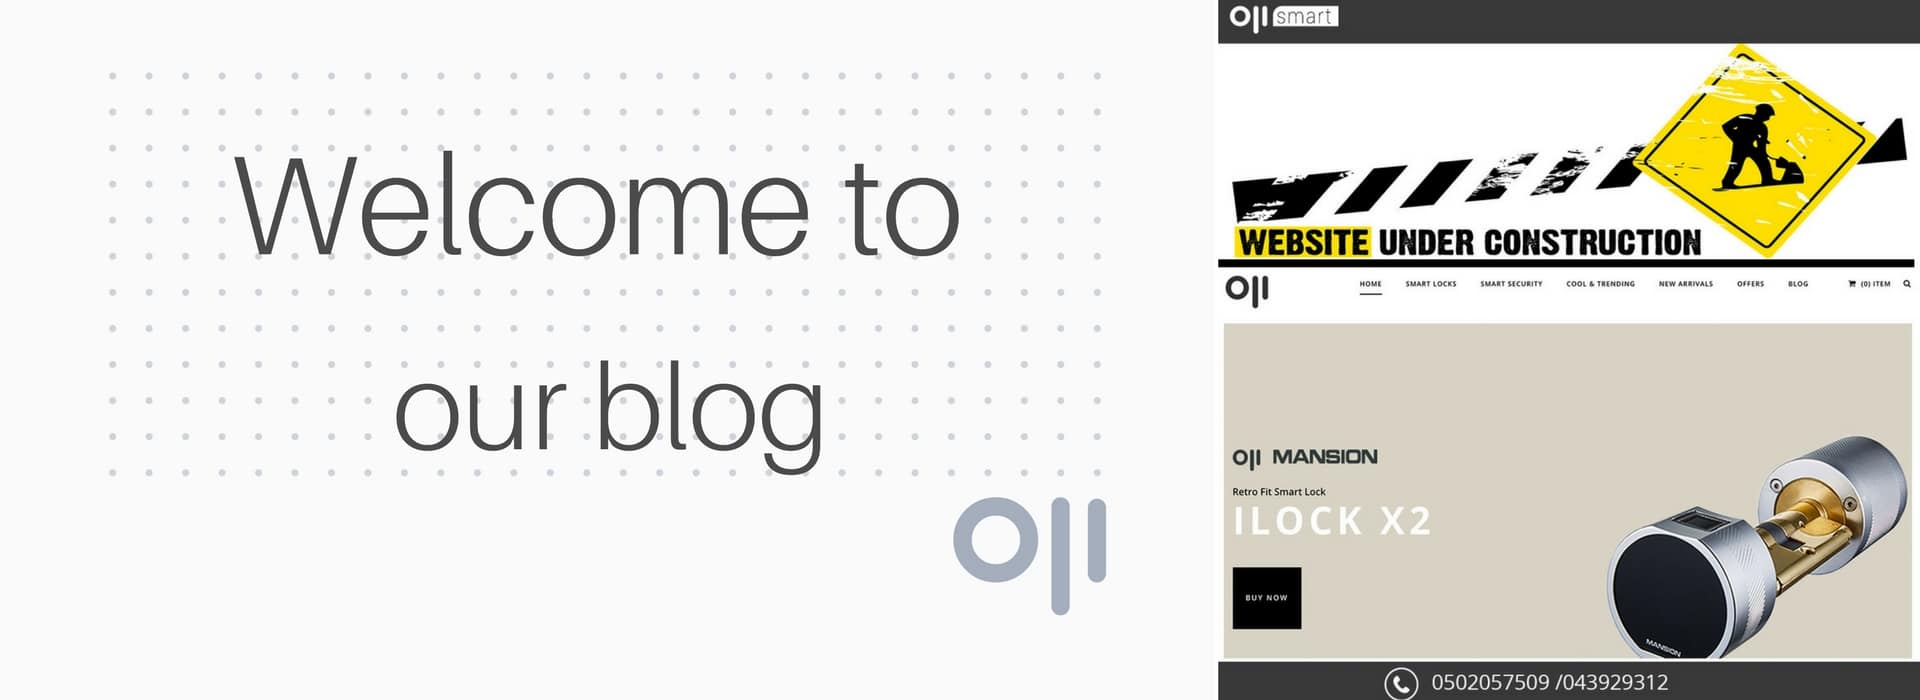 launching ojismart.com| announcing our blog